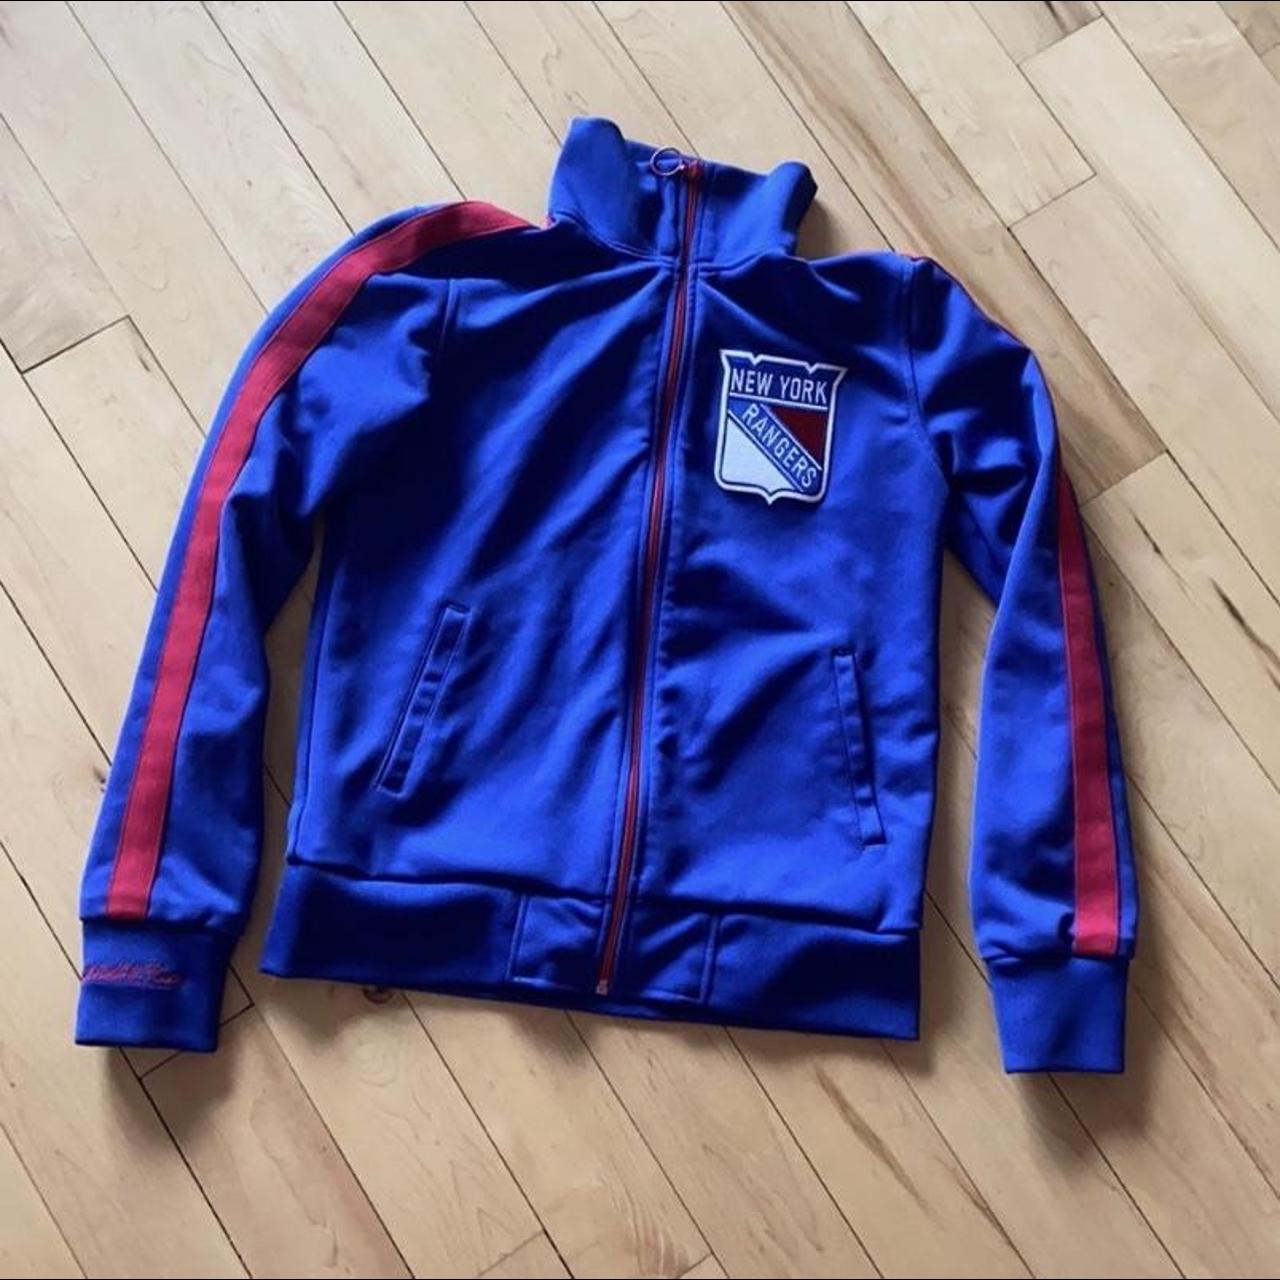 Authentic New York Rangers 1977 Warm Up Jacket